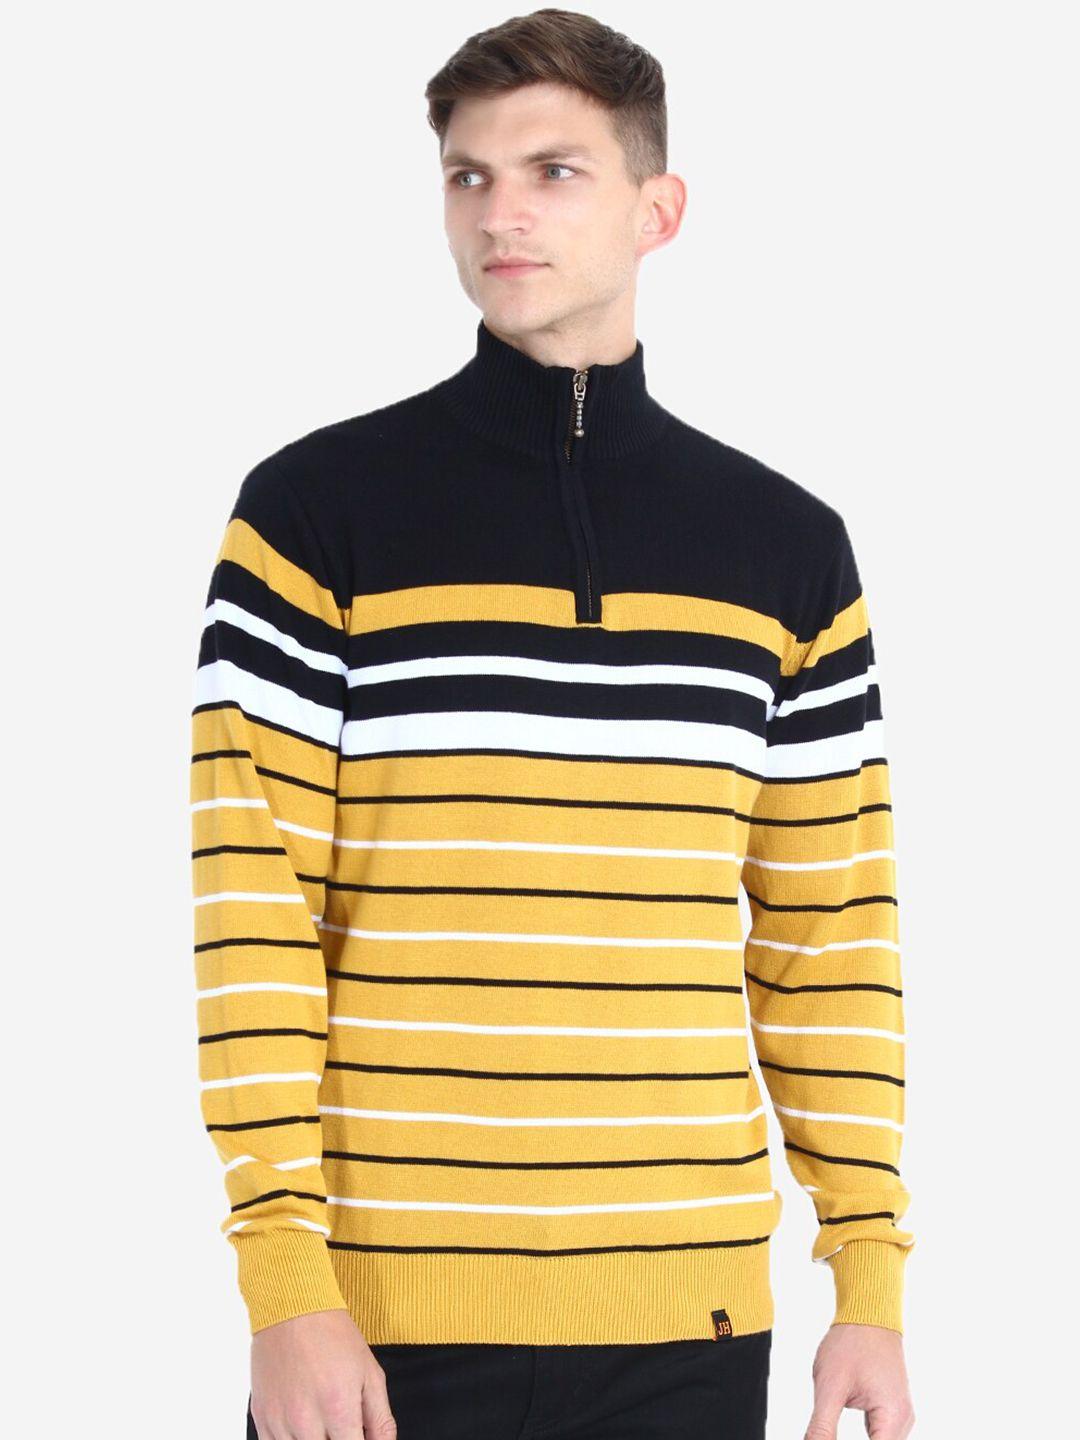 joe hazel men yellow & black striped pullover with zip detail